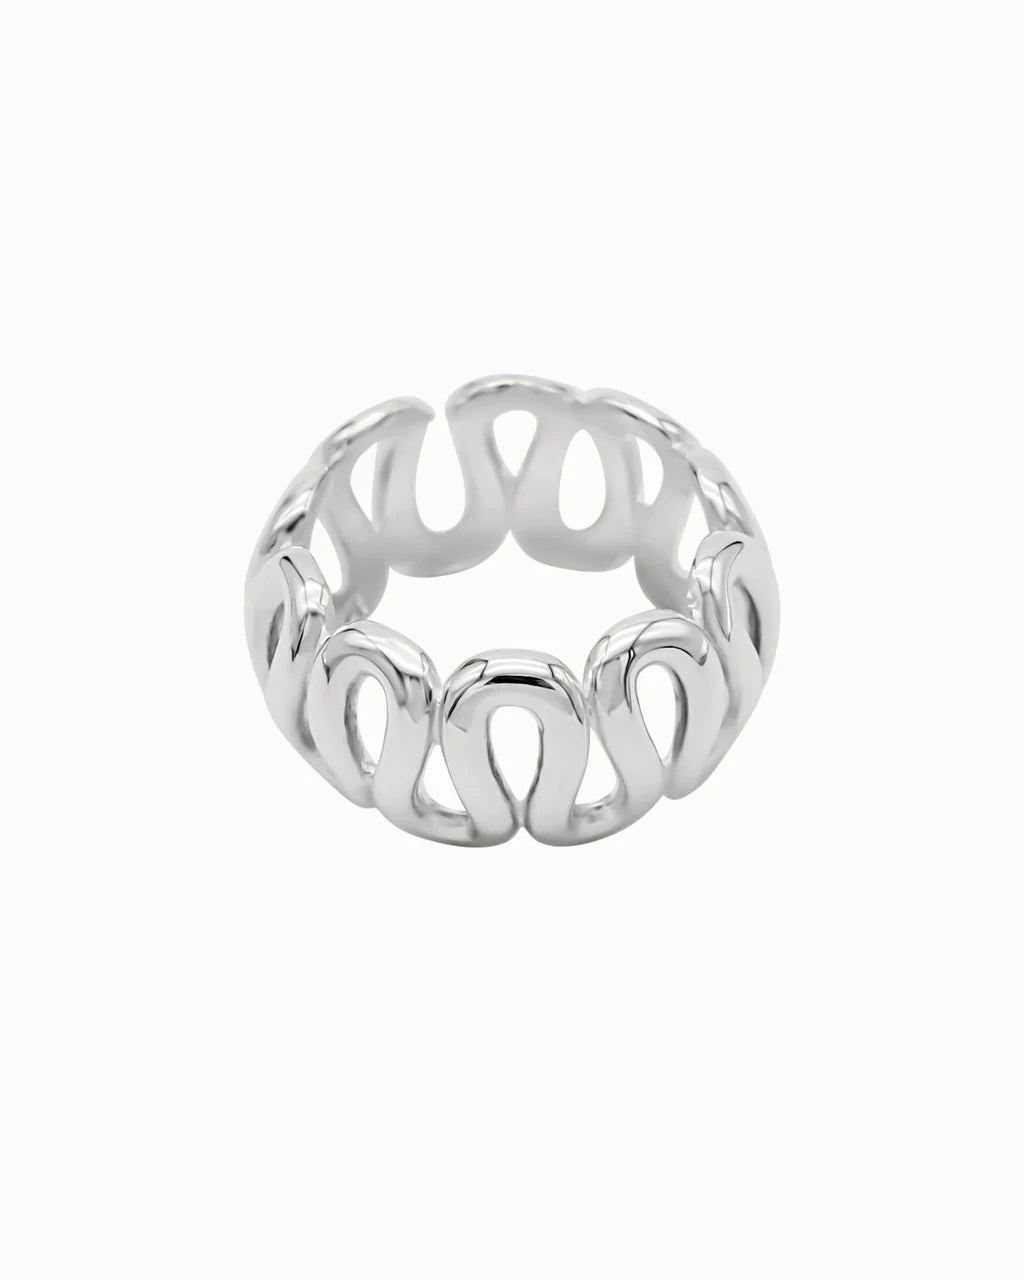 Sapir Bachar - Swirl Ring